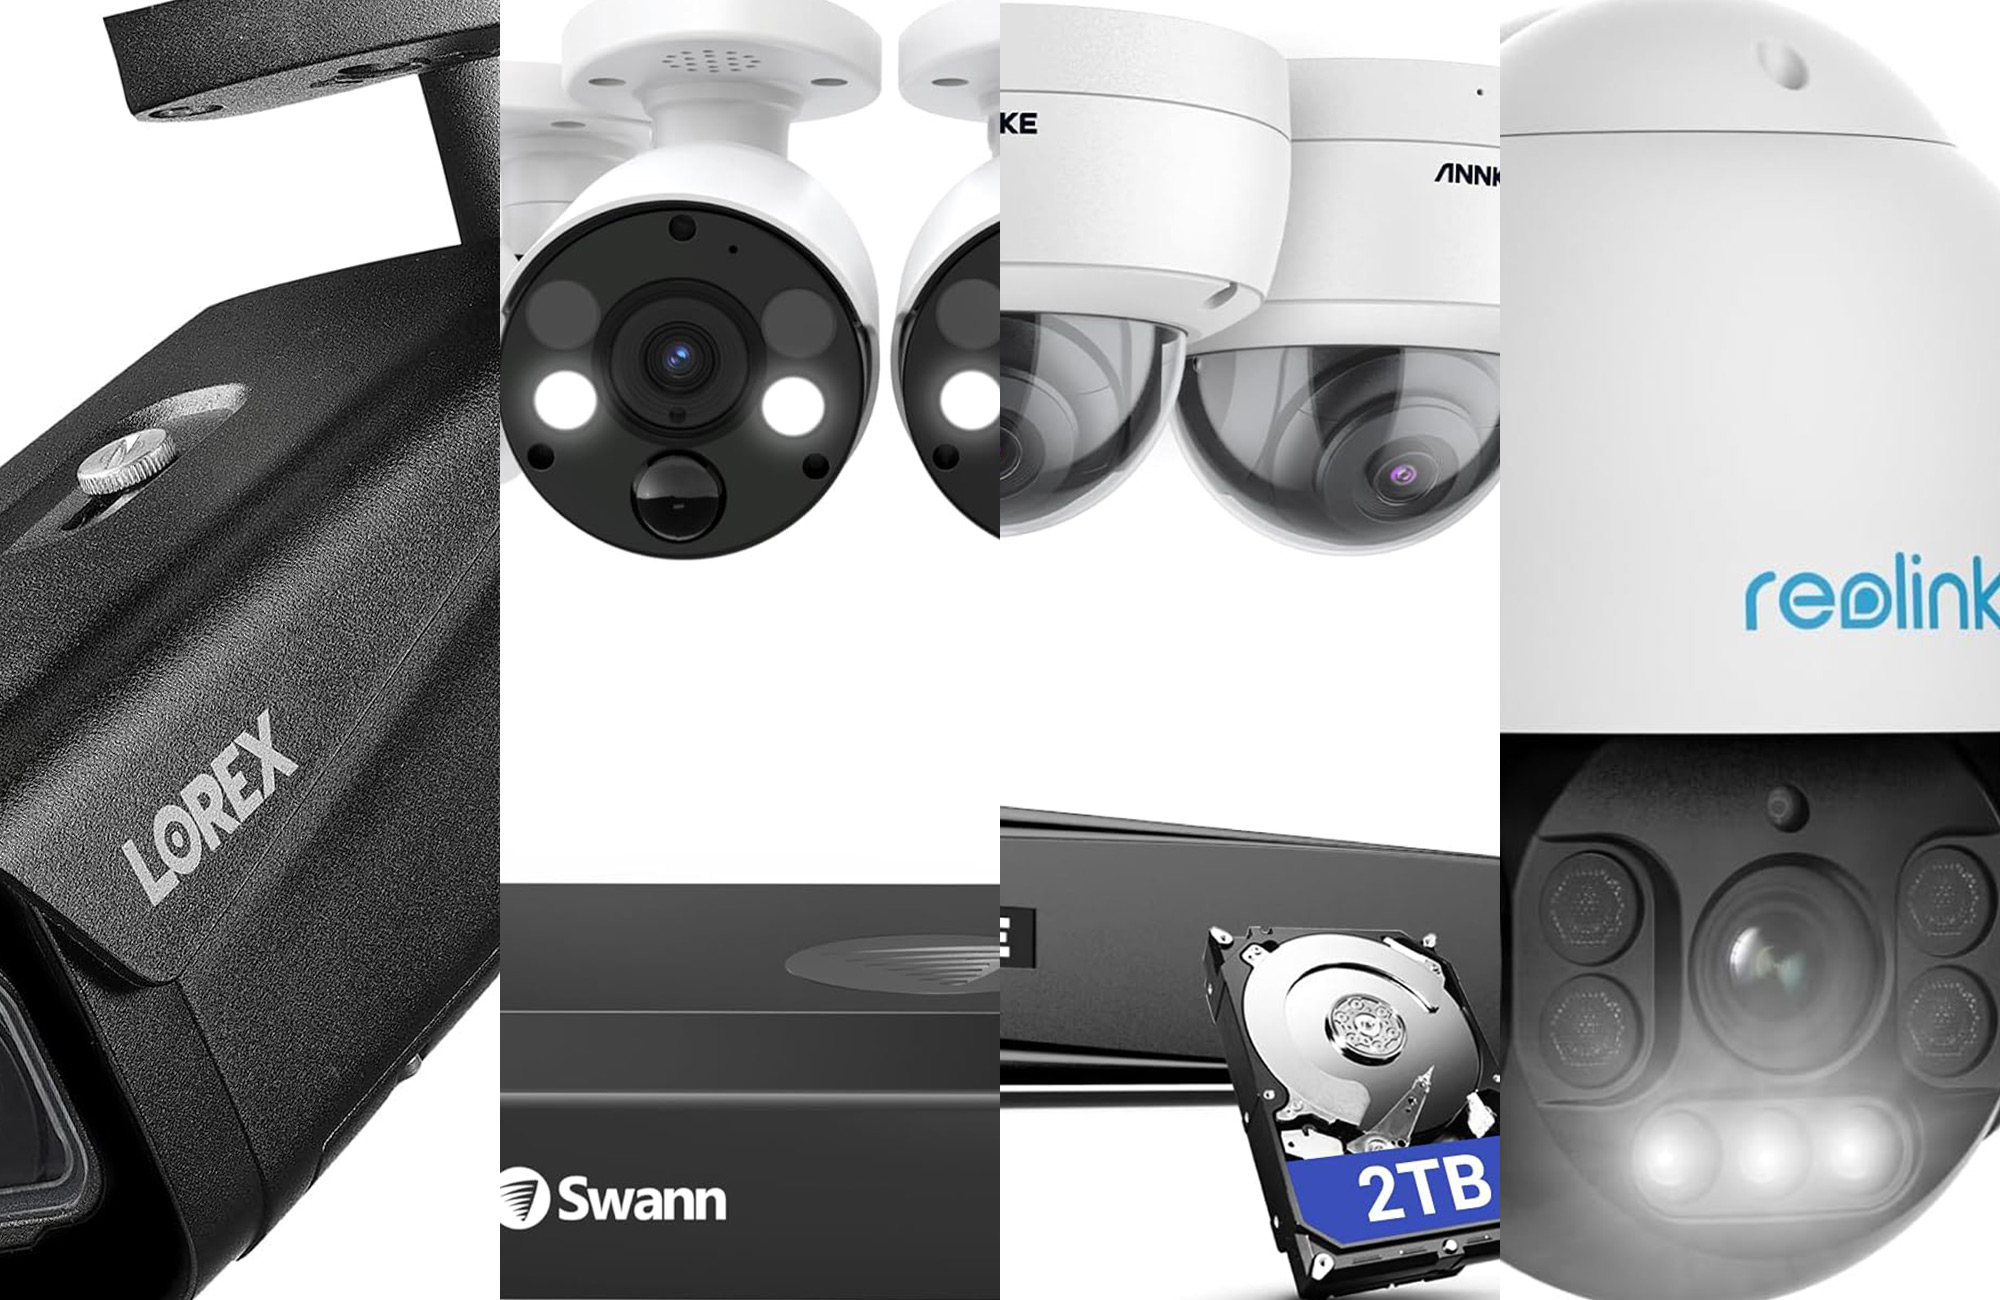 Buy REOLINK PoE AI B5K 4K Ultra HD NVR Security Camera Kit - 2 Cameras